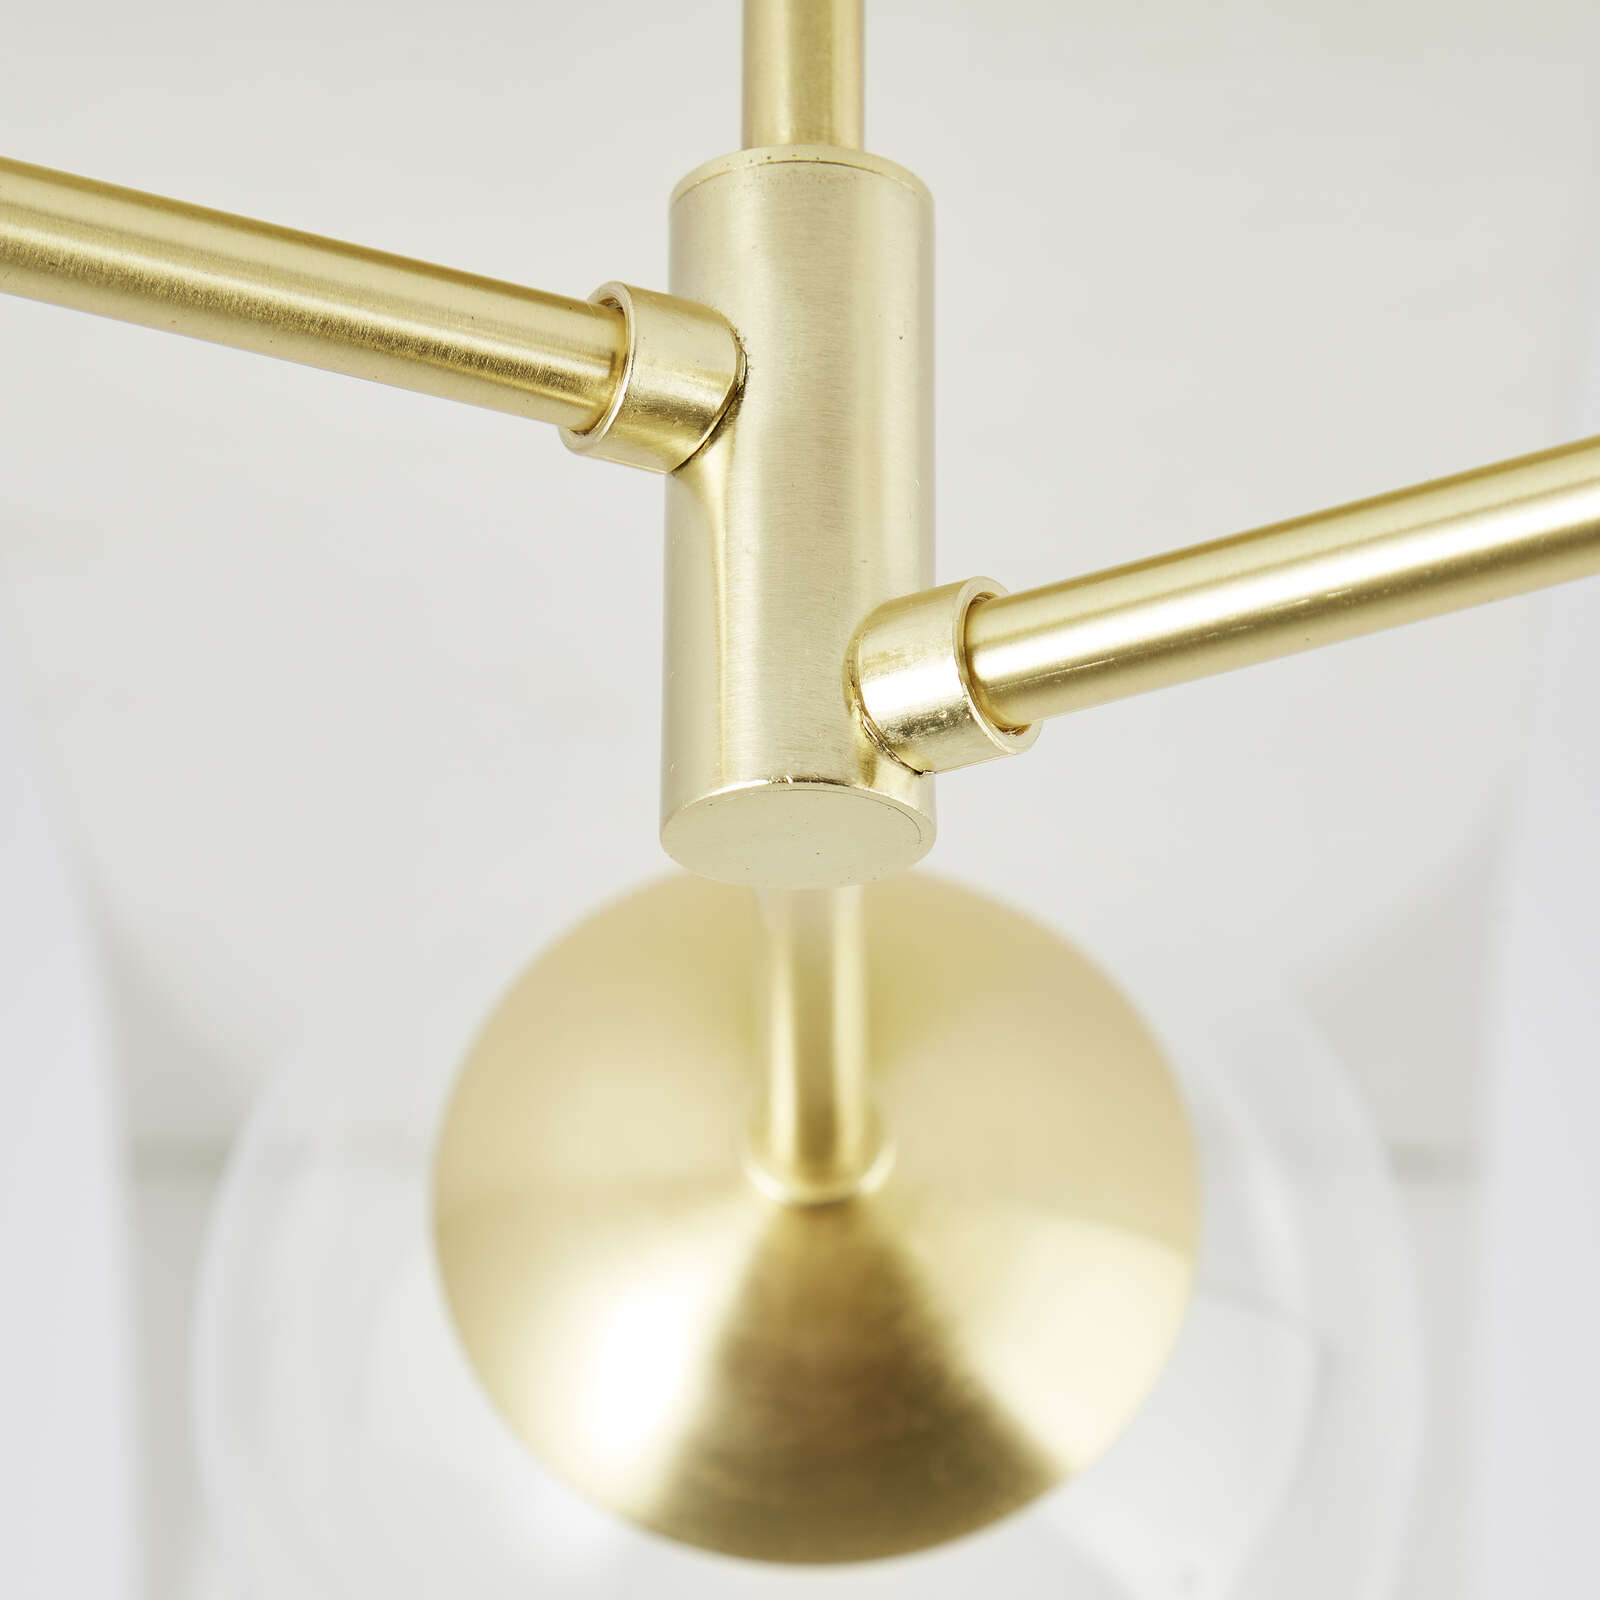             Glazen plafondlamp - Henri 1 - Goud
        